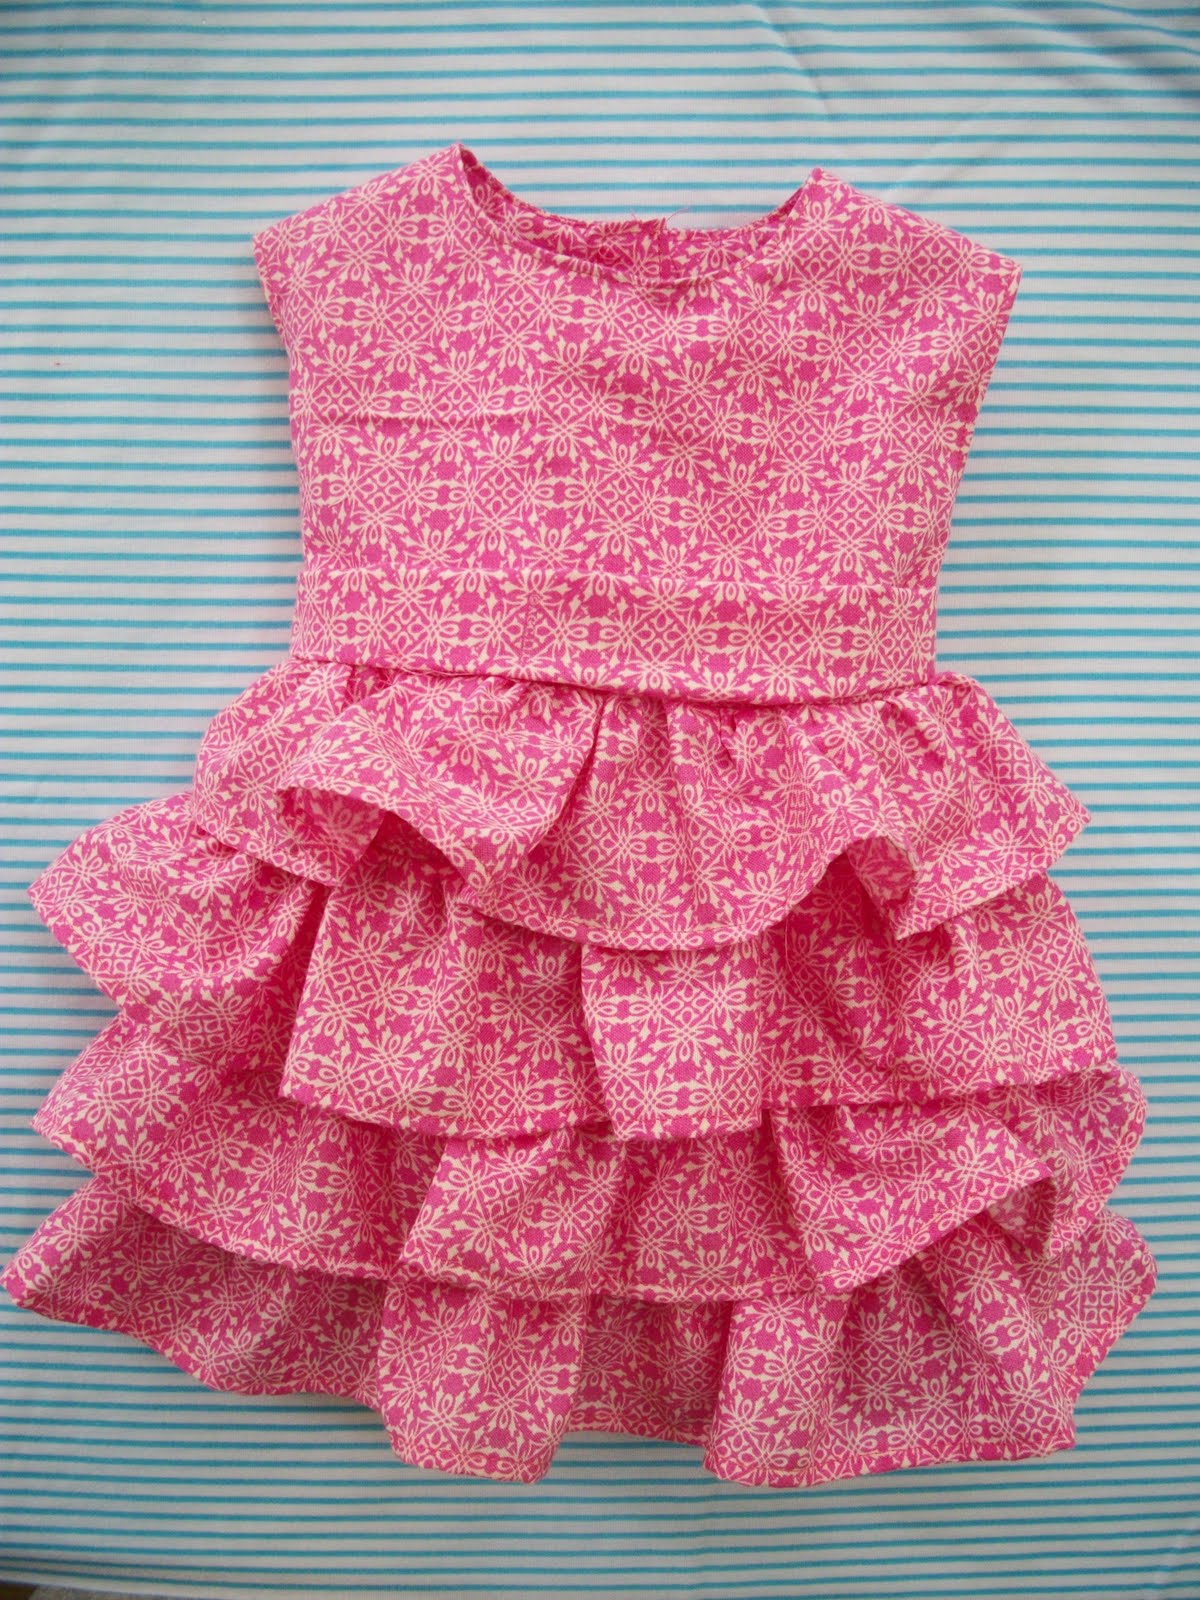 Savani S Creations The Little Pink Dress